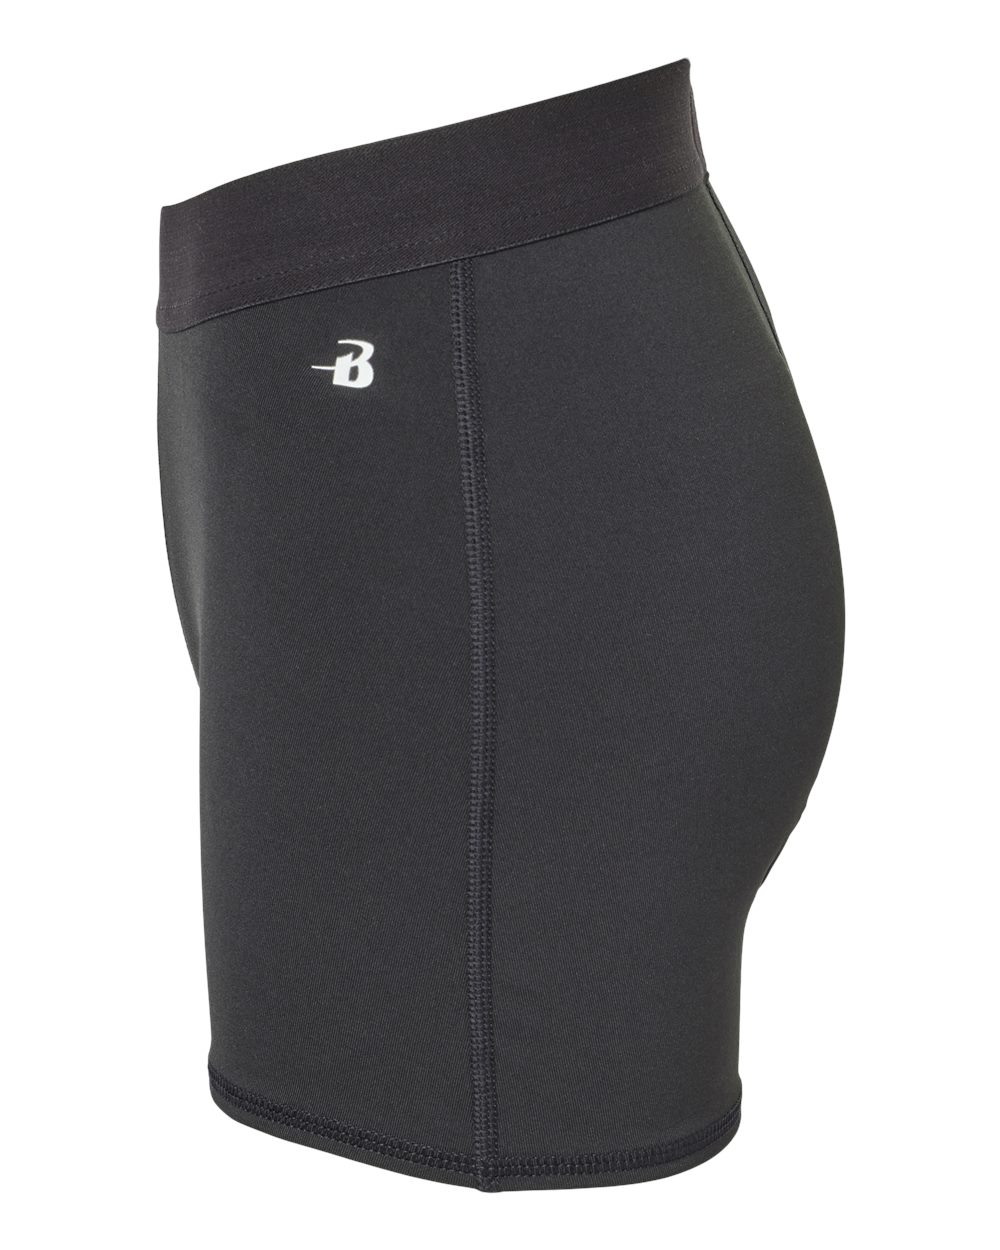  Badger 3'' Women's Pro-Compression Shorts